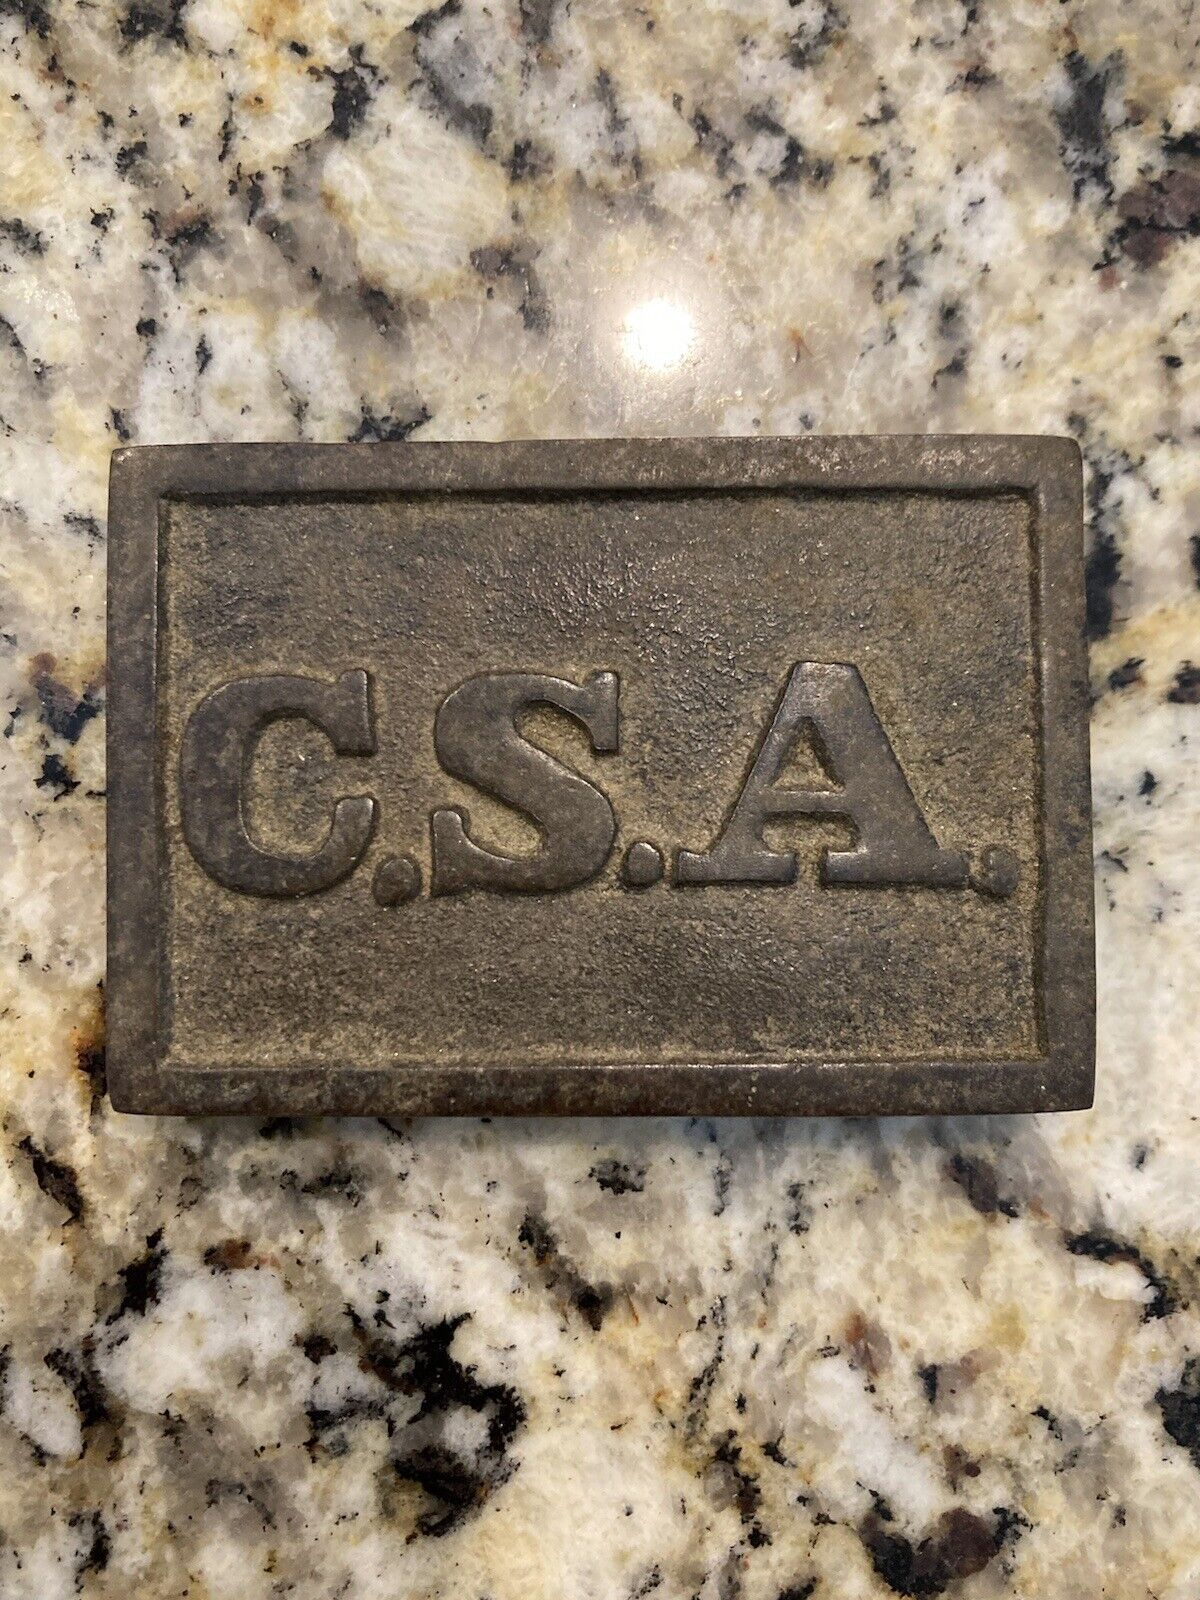 CSA Confederate Atlanta Plate Buckle - Cast from a Dug Original Ground Aged